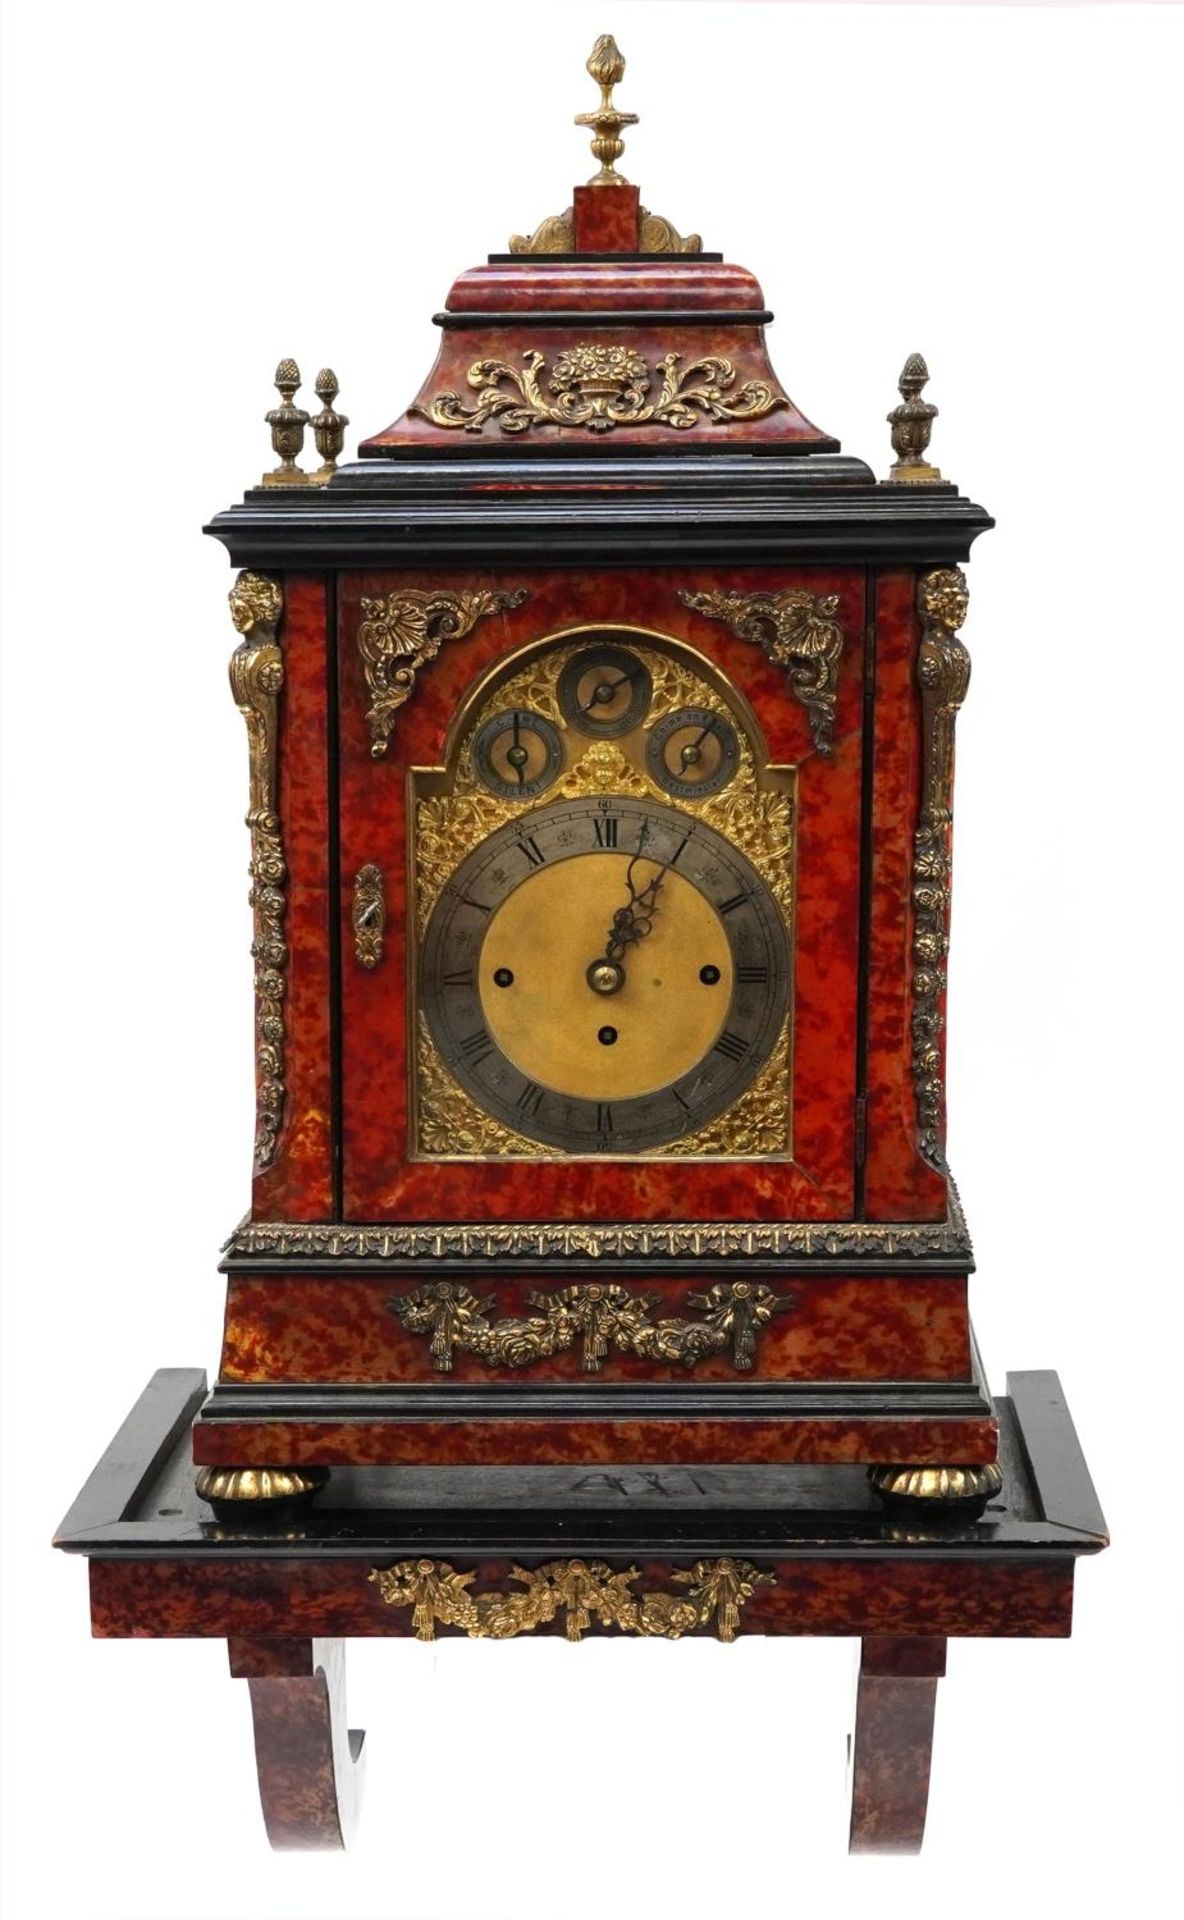 Oversized 19th century red tortoiseshell bracket clock with bracket, the clock striking on five